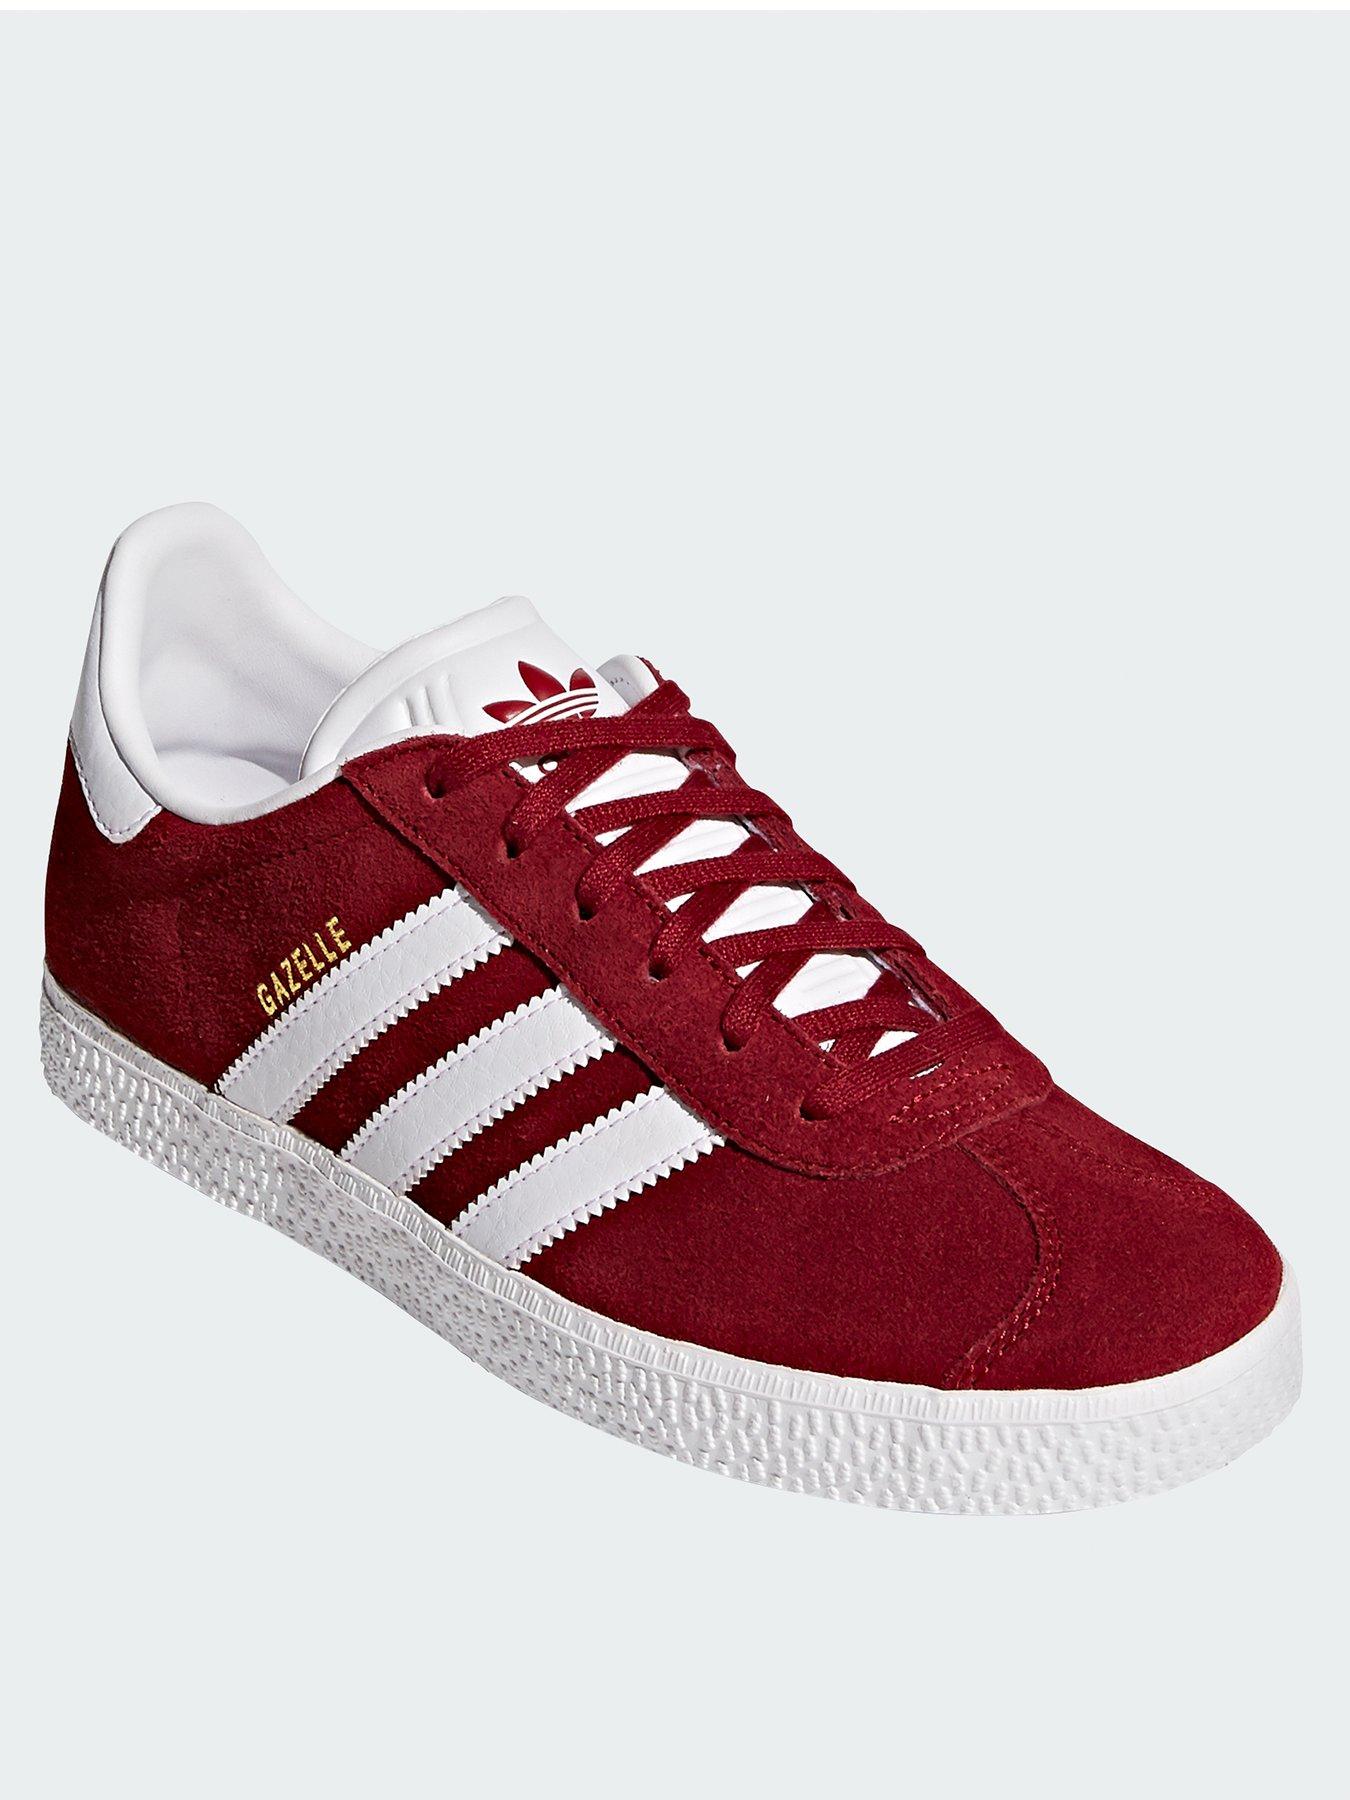 Adidas gazelle оригинал. Кроссовки adidas Originals Gazelle. Adidas Ozelia. Адидас газели 2023. Adidas Originals Superstar Gazelle Red.